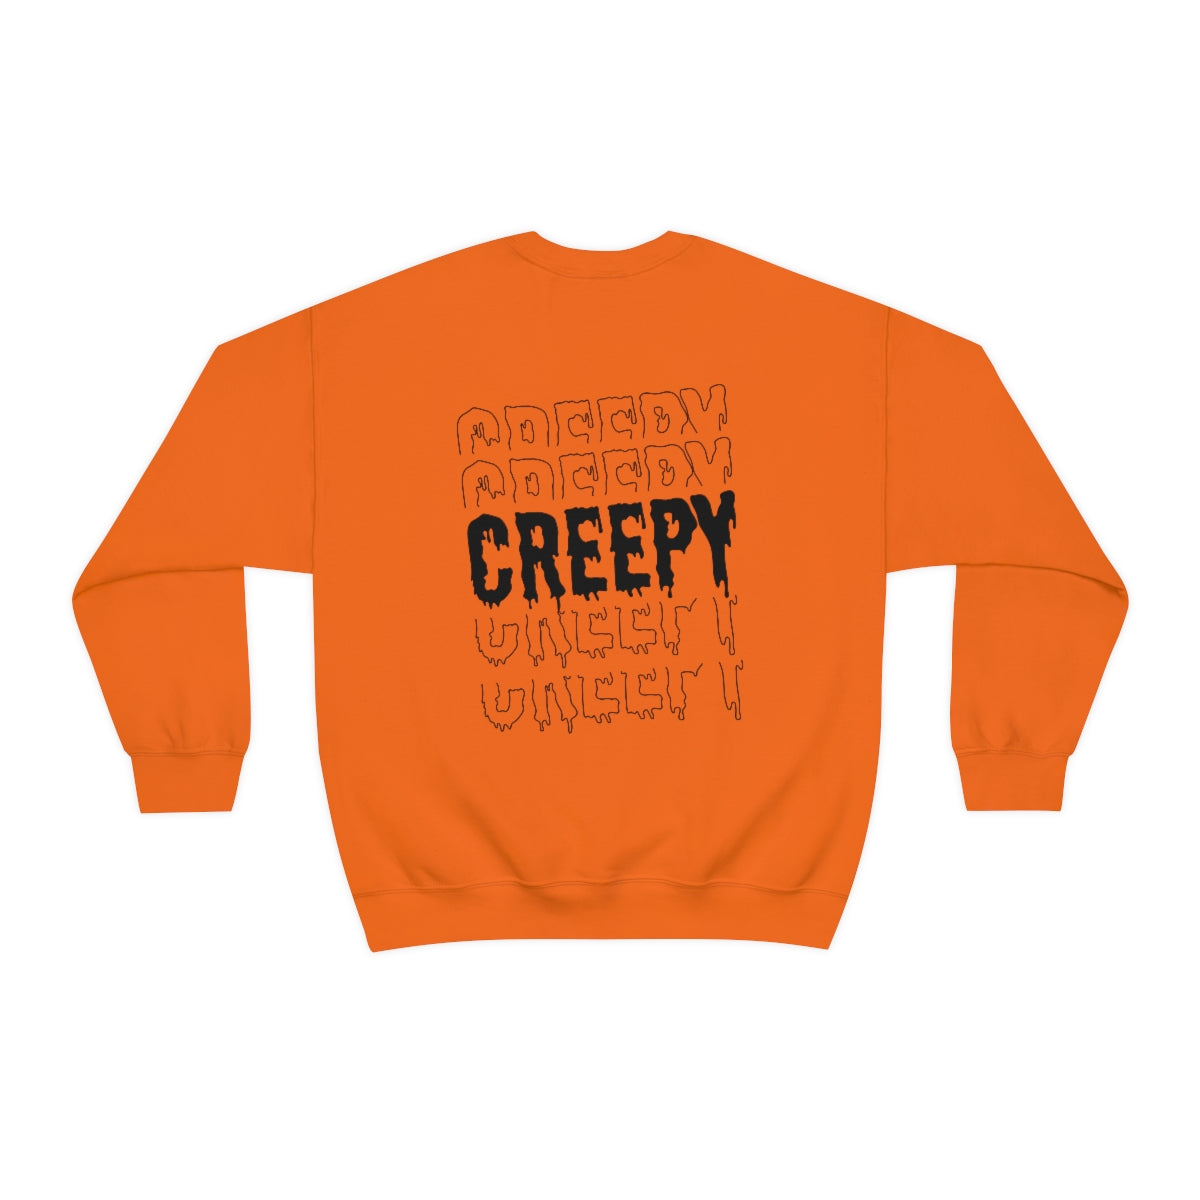 Creepy Crewneck